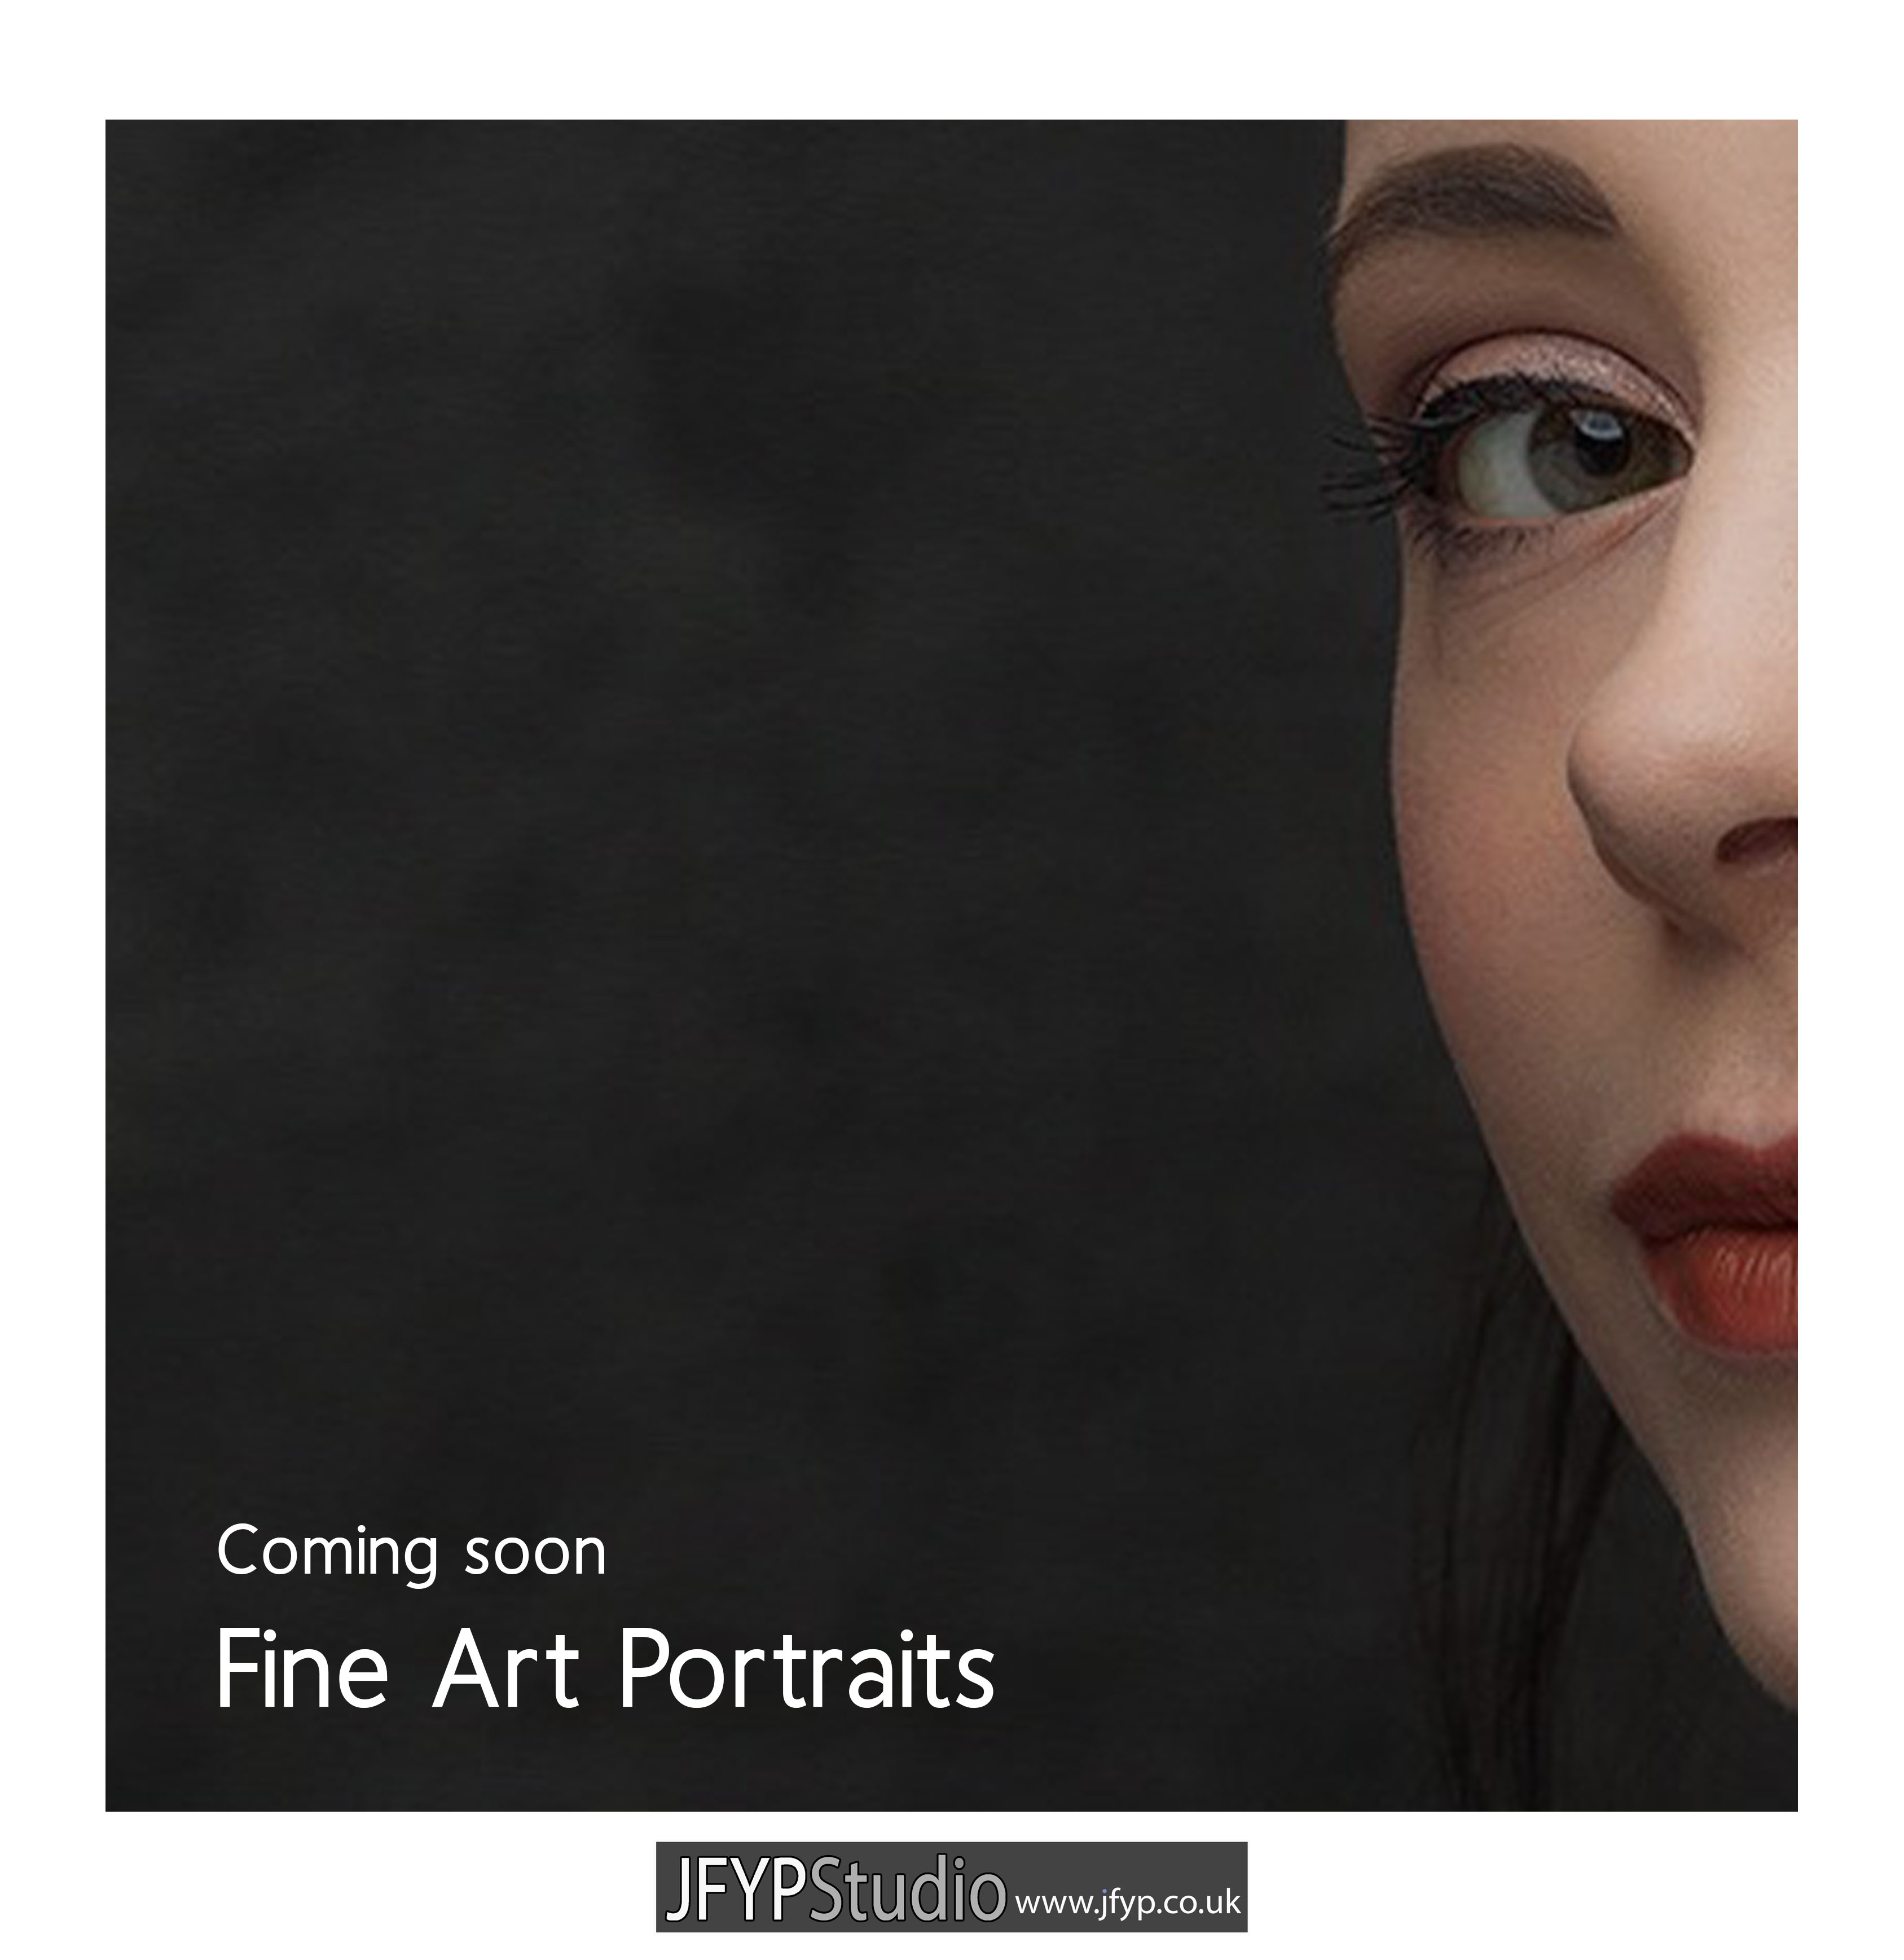 Coming soon – Fine Art Portraits